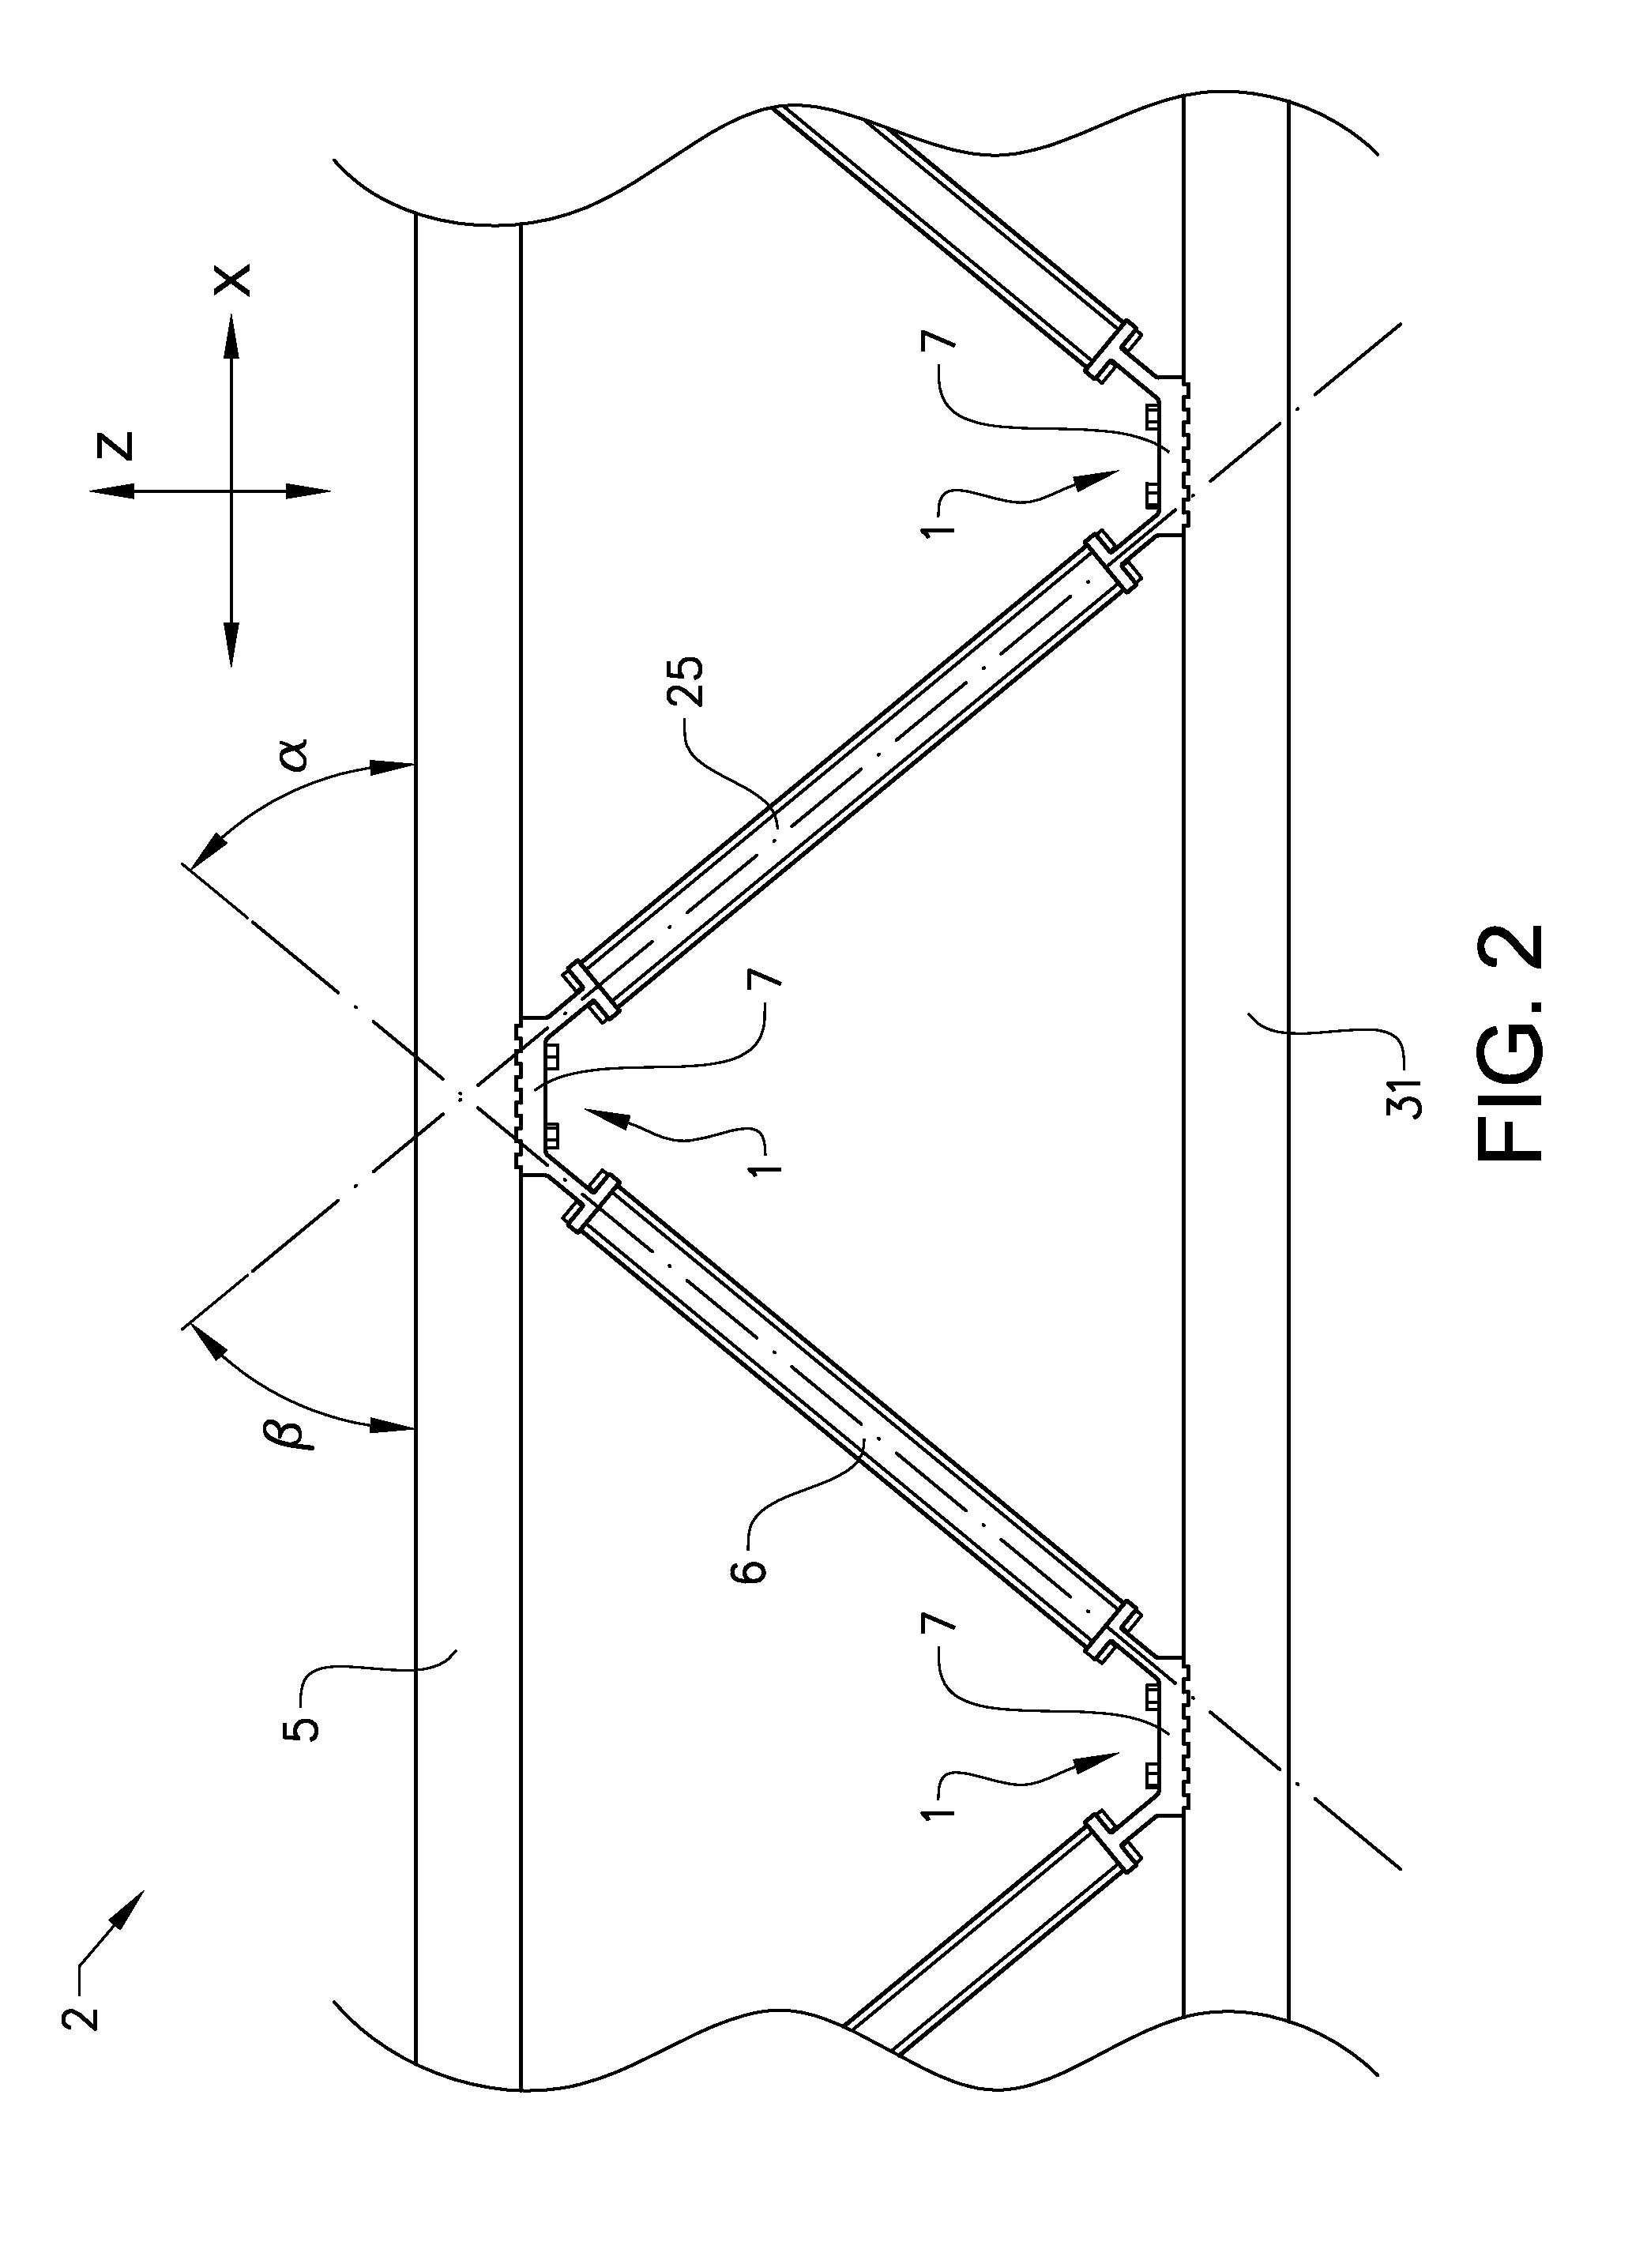 Mechanical coupling arrangement for a lattice support beam